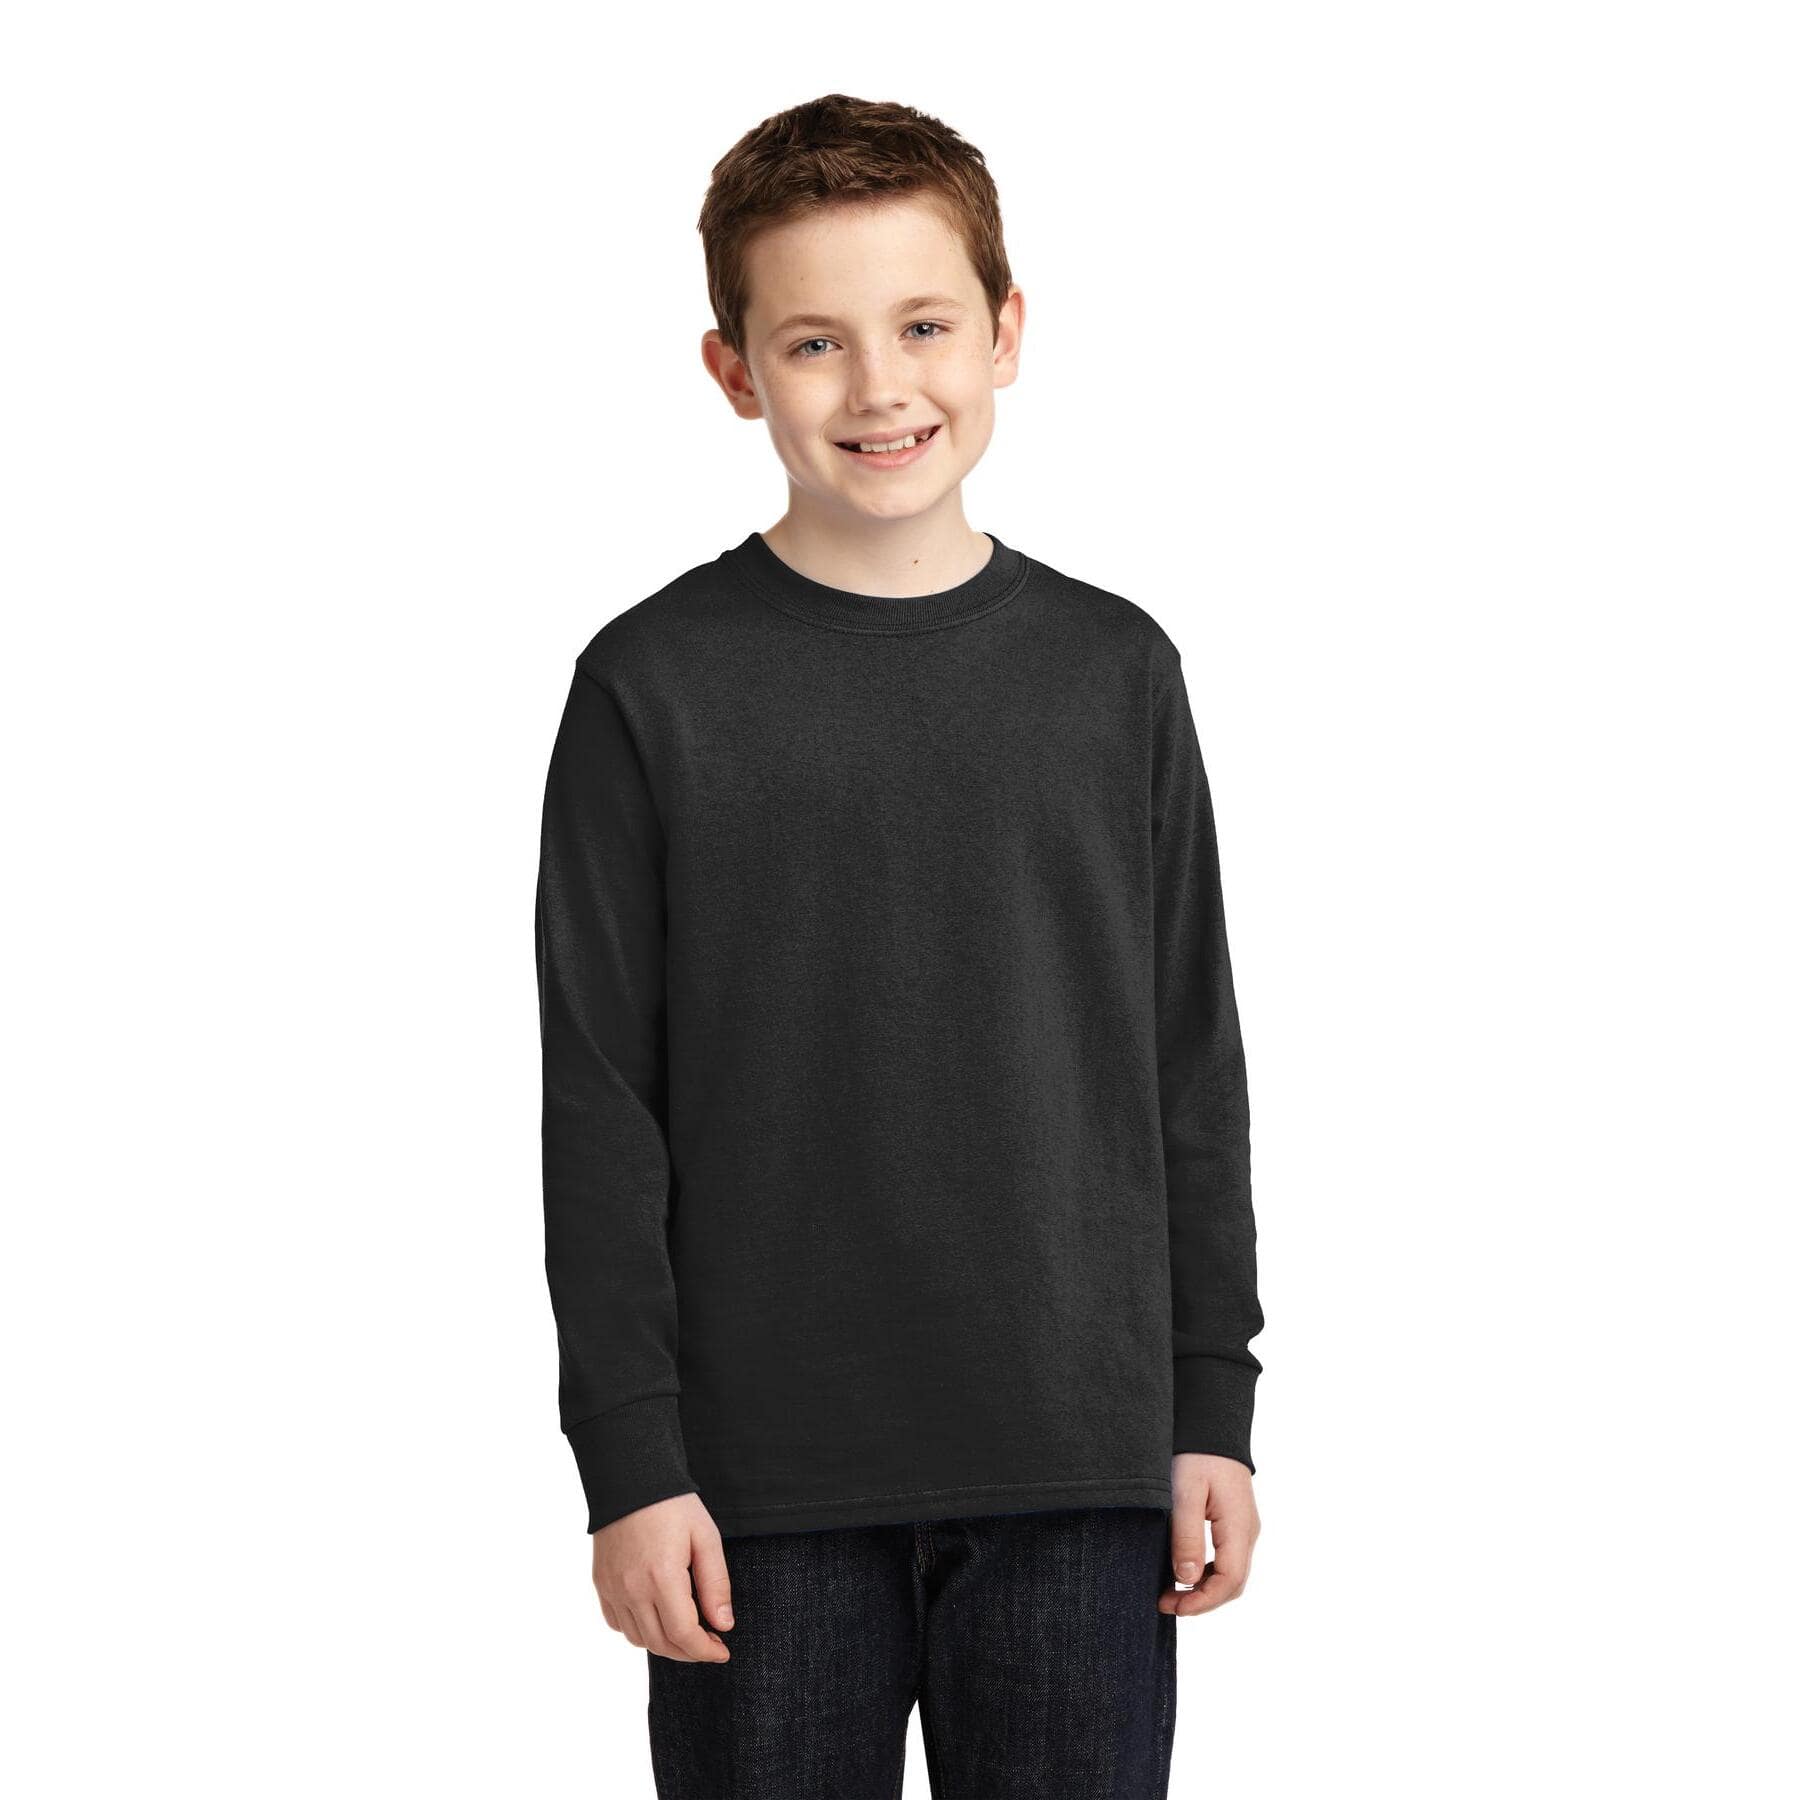 Port &#x26; Company&#xAE; Youth Long Sleeve Core Cotton T-Shirt